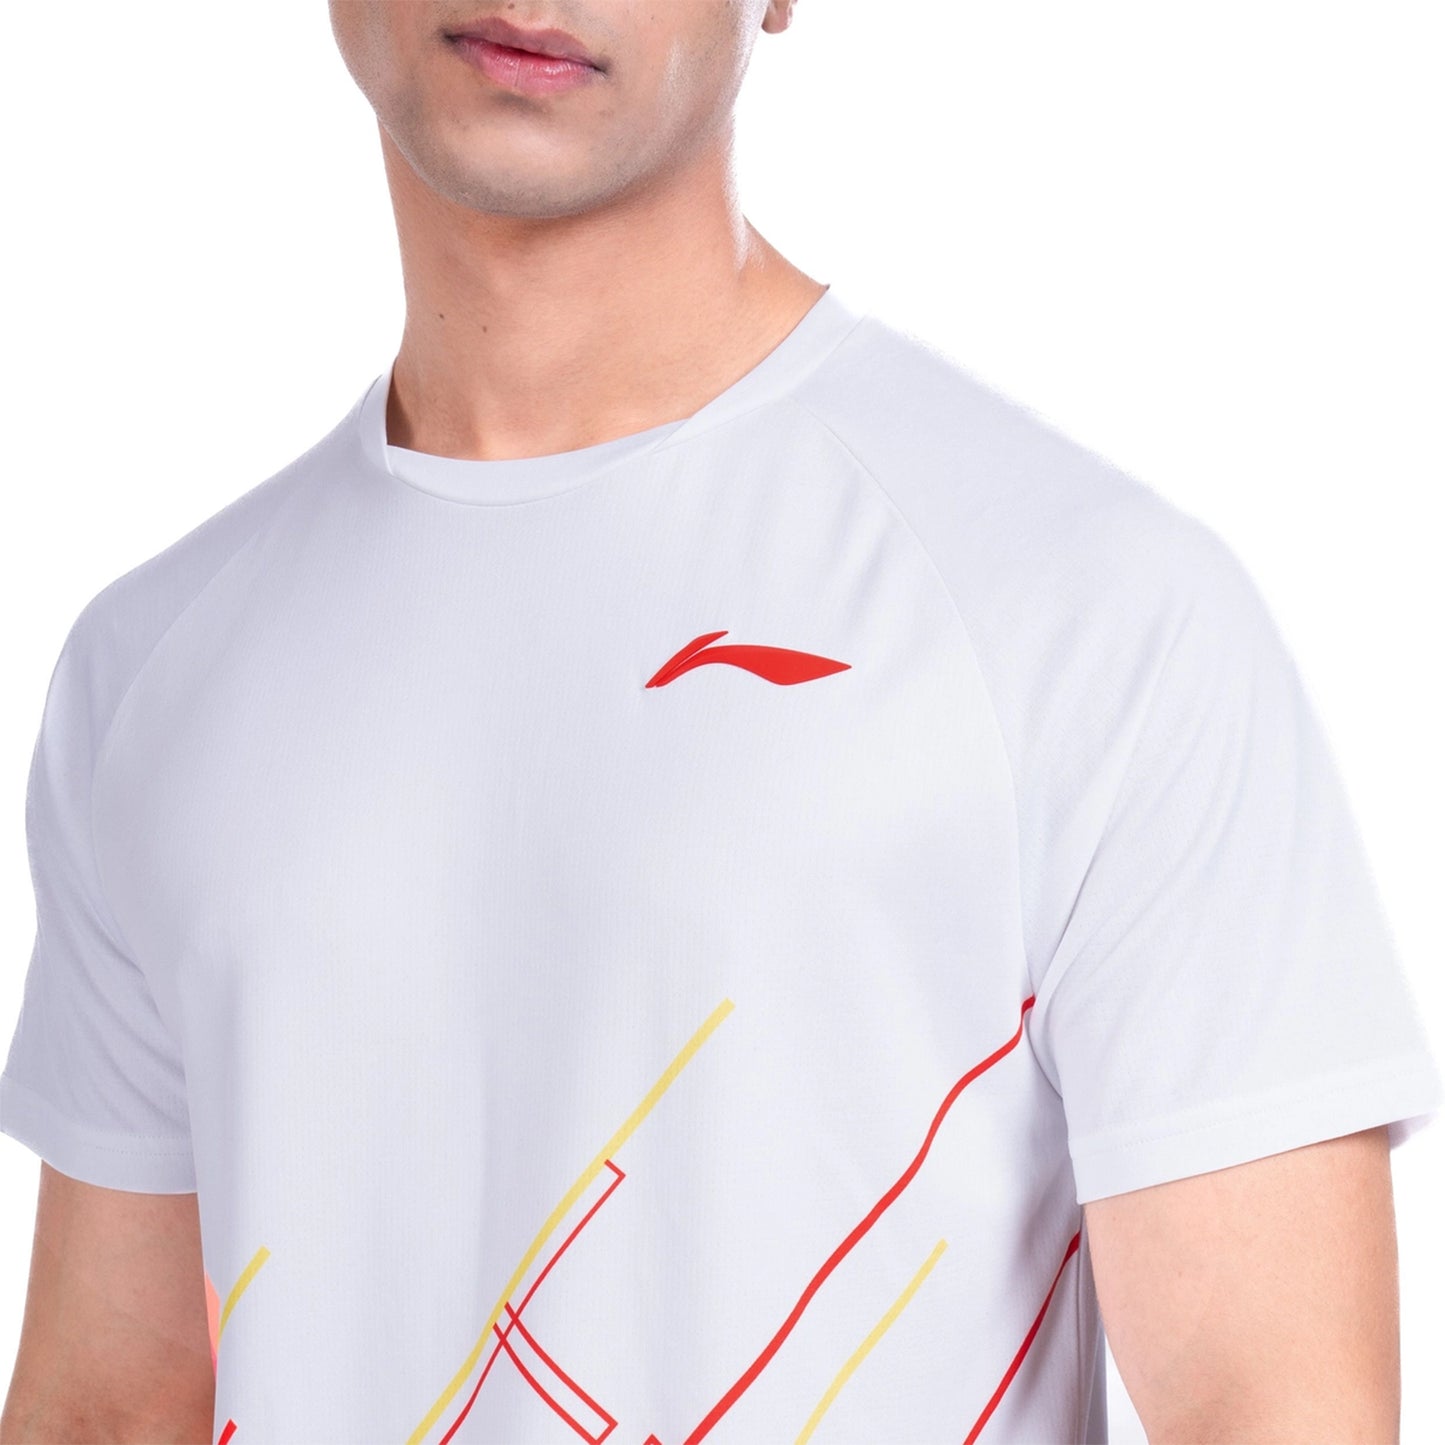 Li-Ning ATST963 Men's Round Neck Badminton T-shirt - Best Price online Prokicksports.com